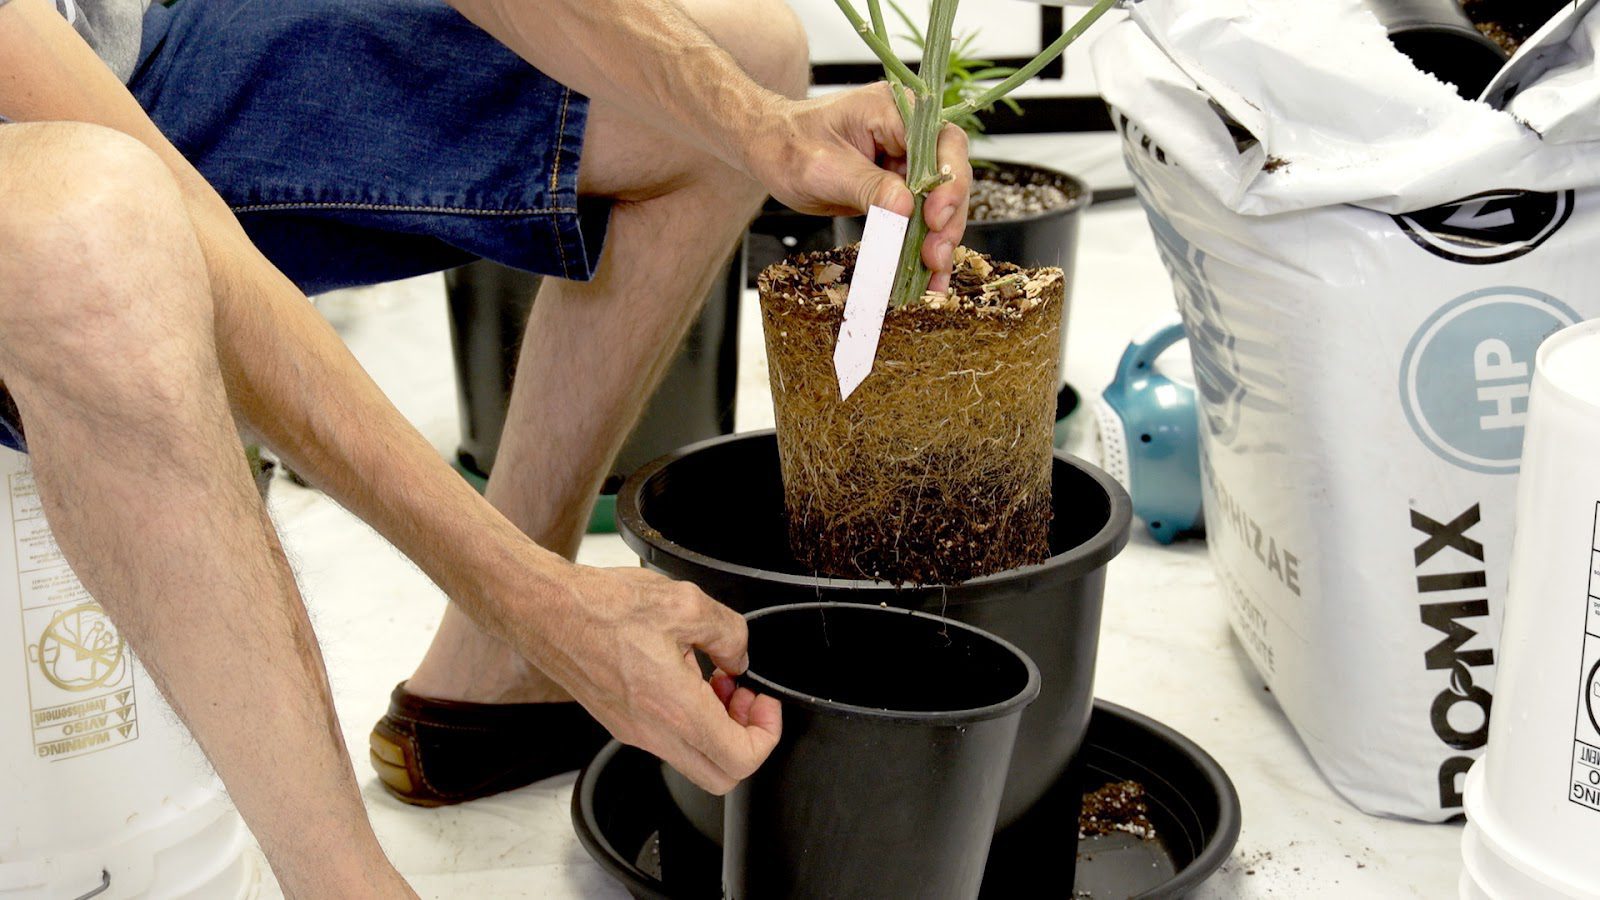 transplanting cannabis seedling